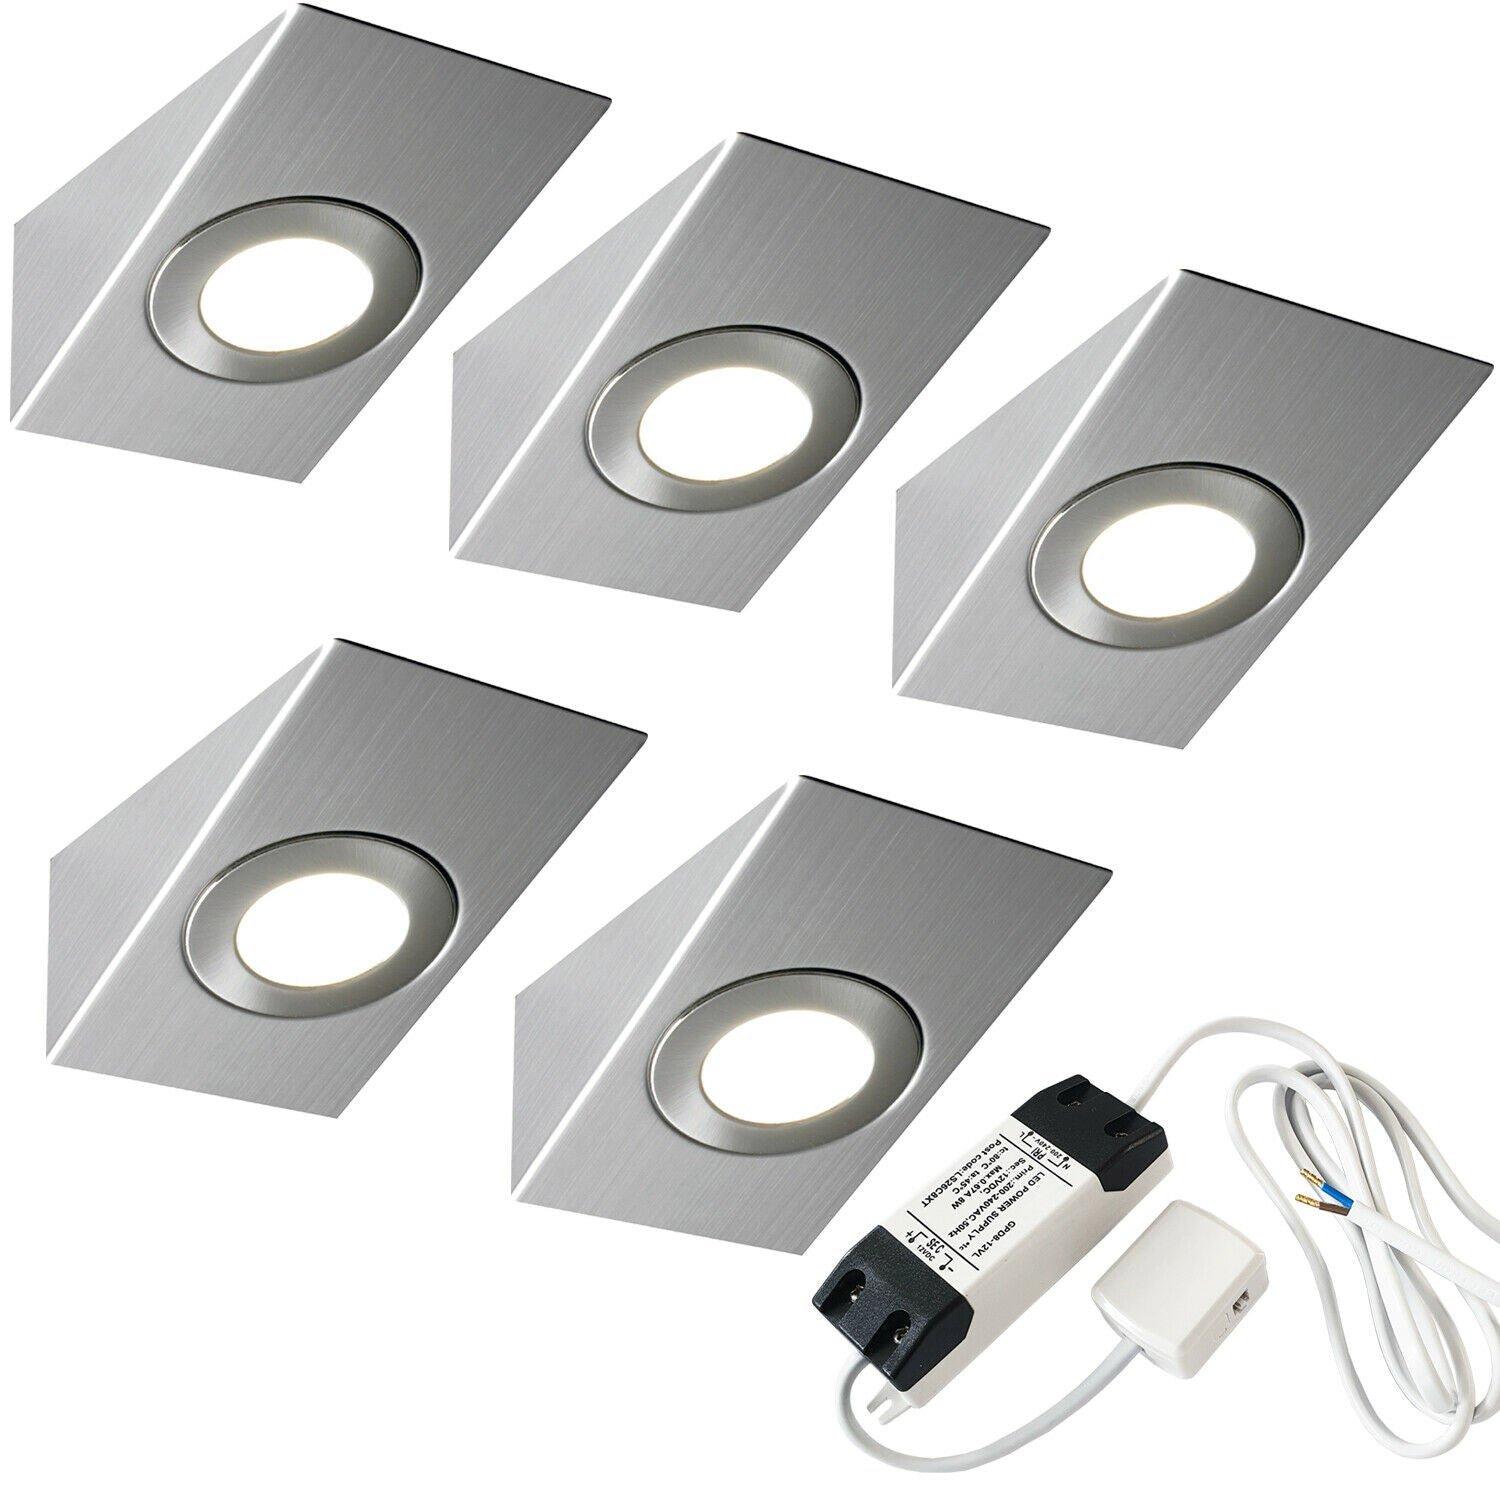 5x BRUSHED NICKEL Wedge Surface Under Cabinet Kitchen Light & Driver Kit - Warm White LED